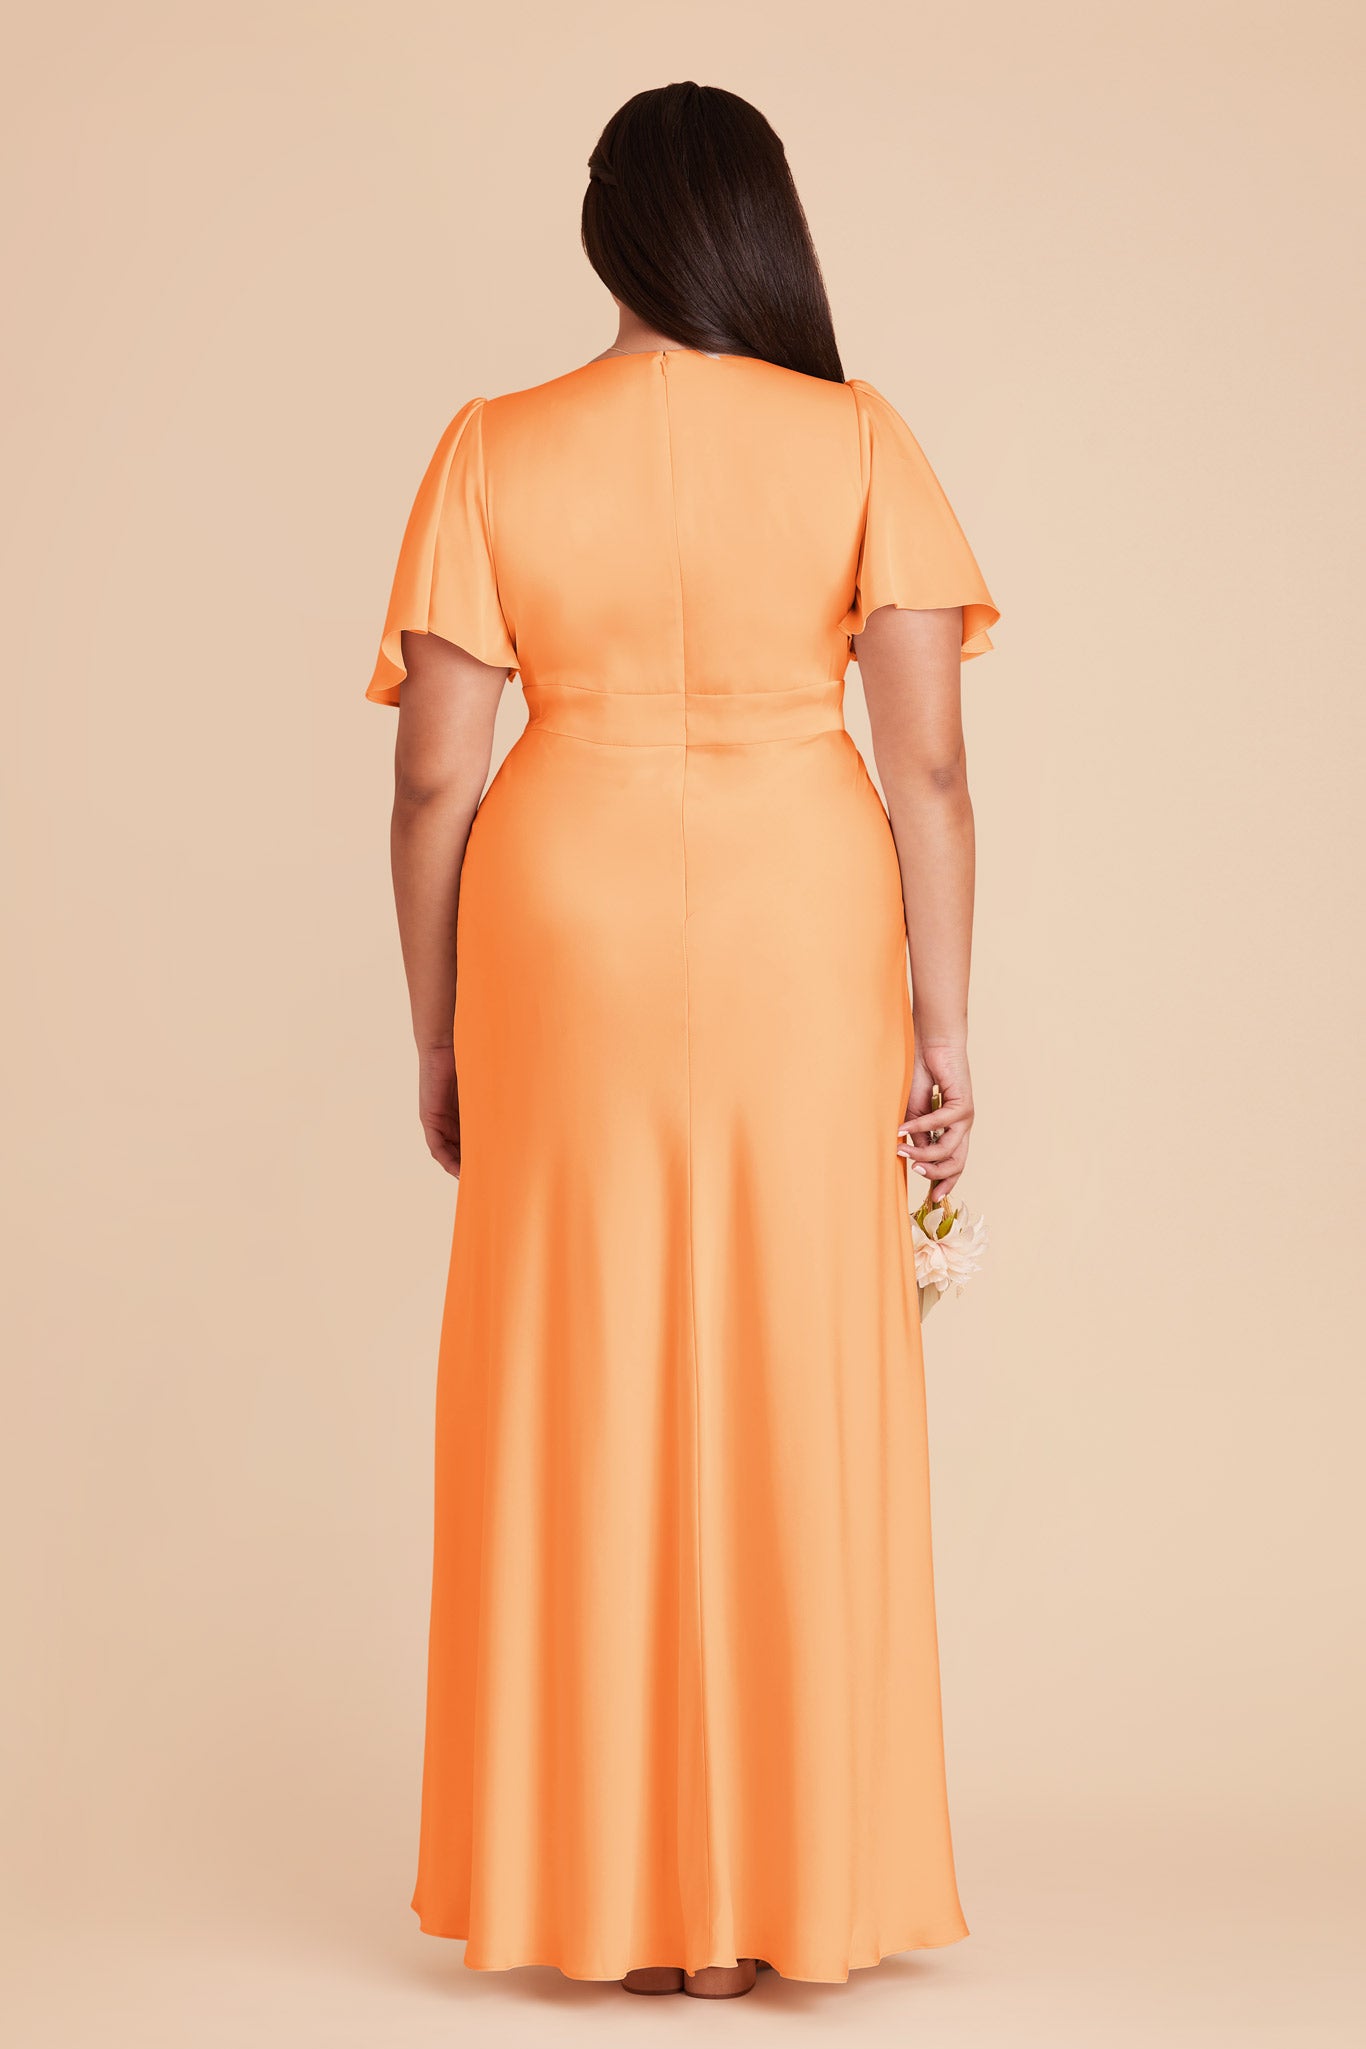 Apricot Marni Matte Satin Dress by Birdy Grey